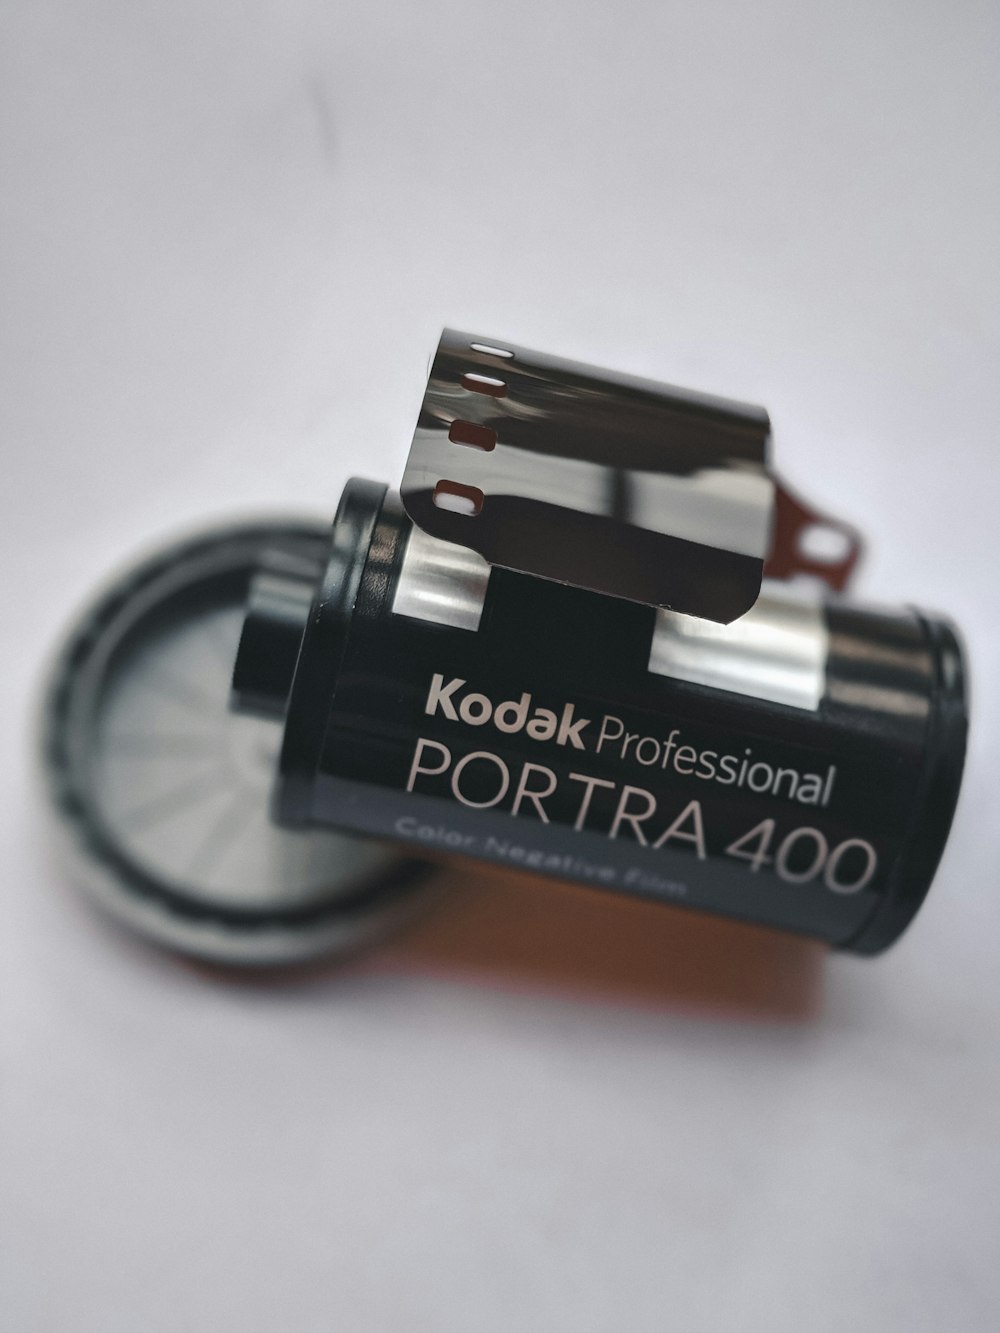 Kodak Professional portra 400 camera film